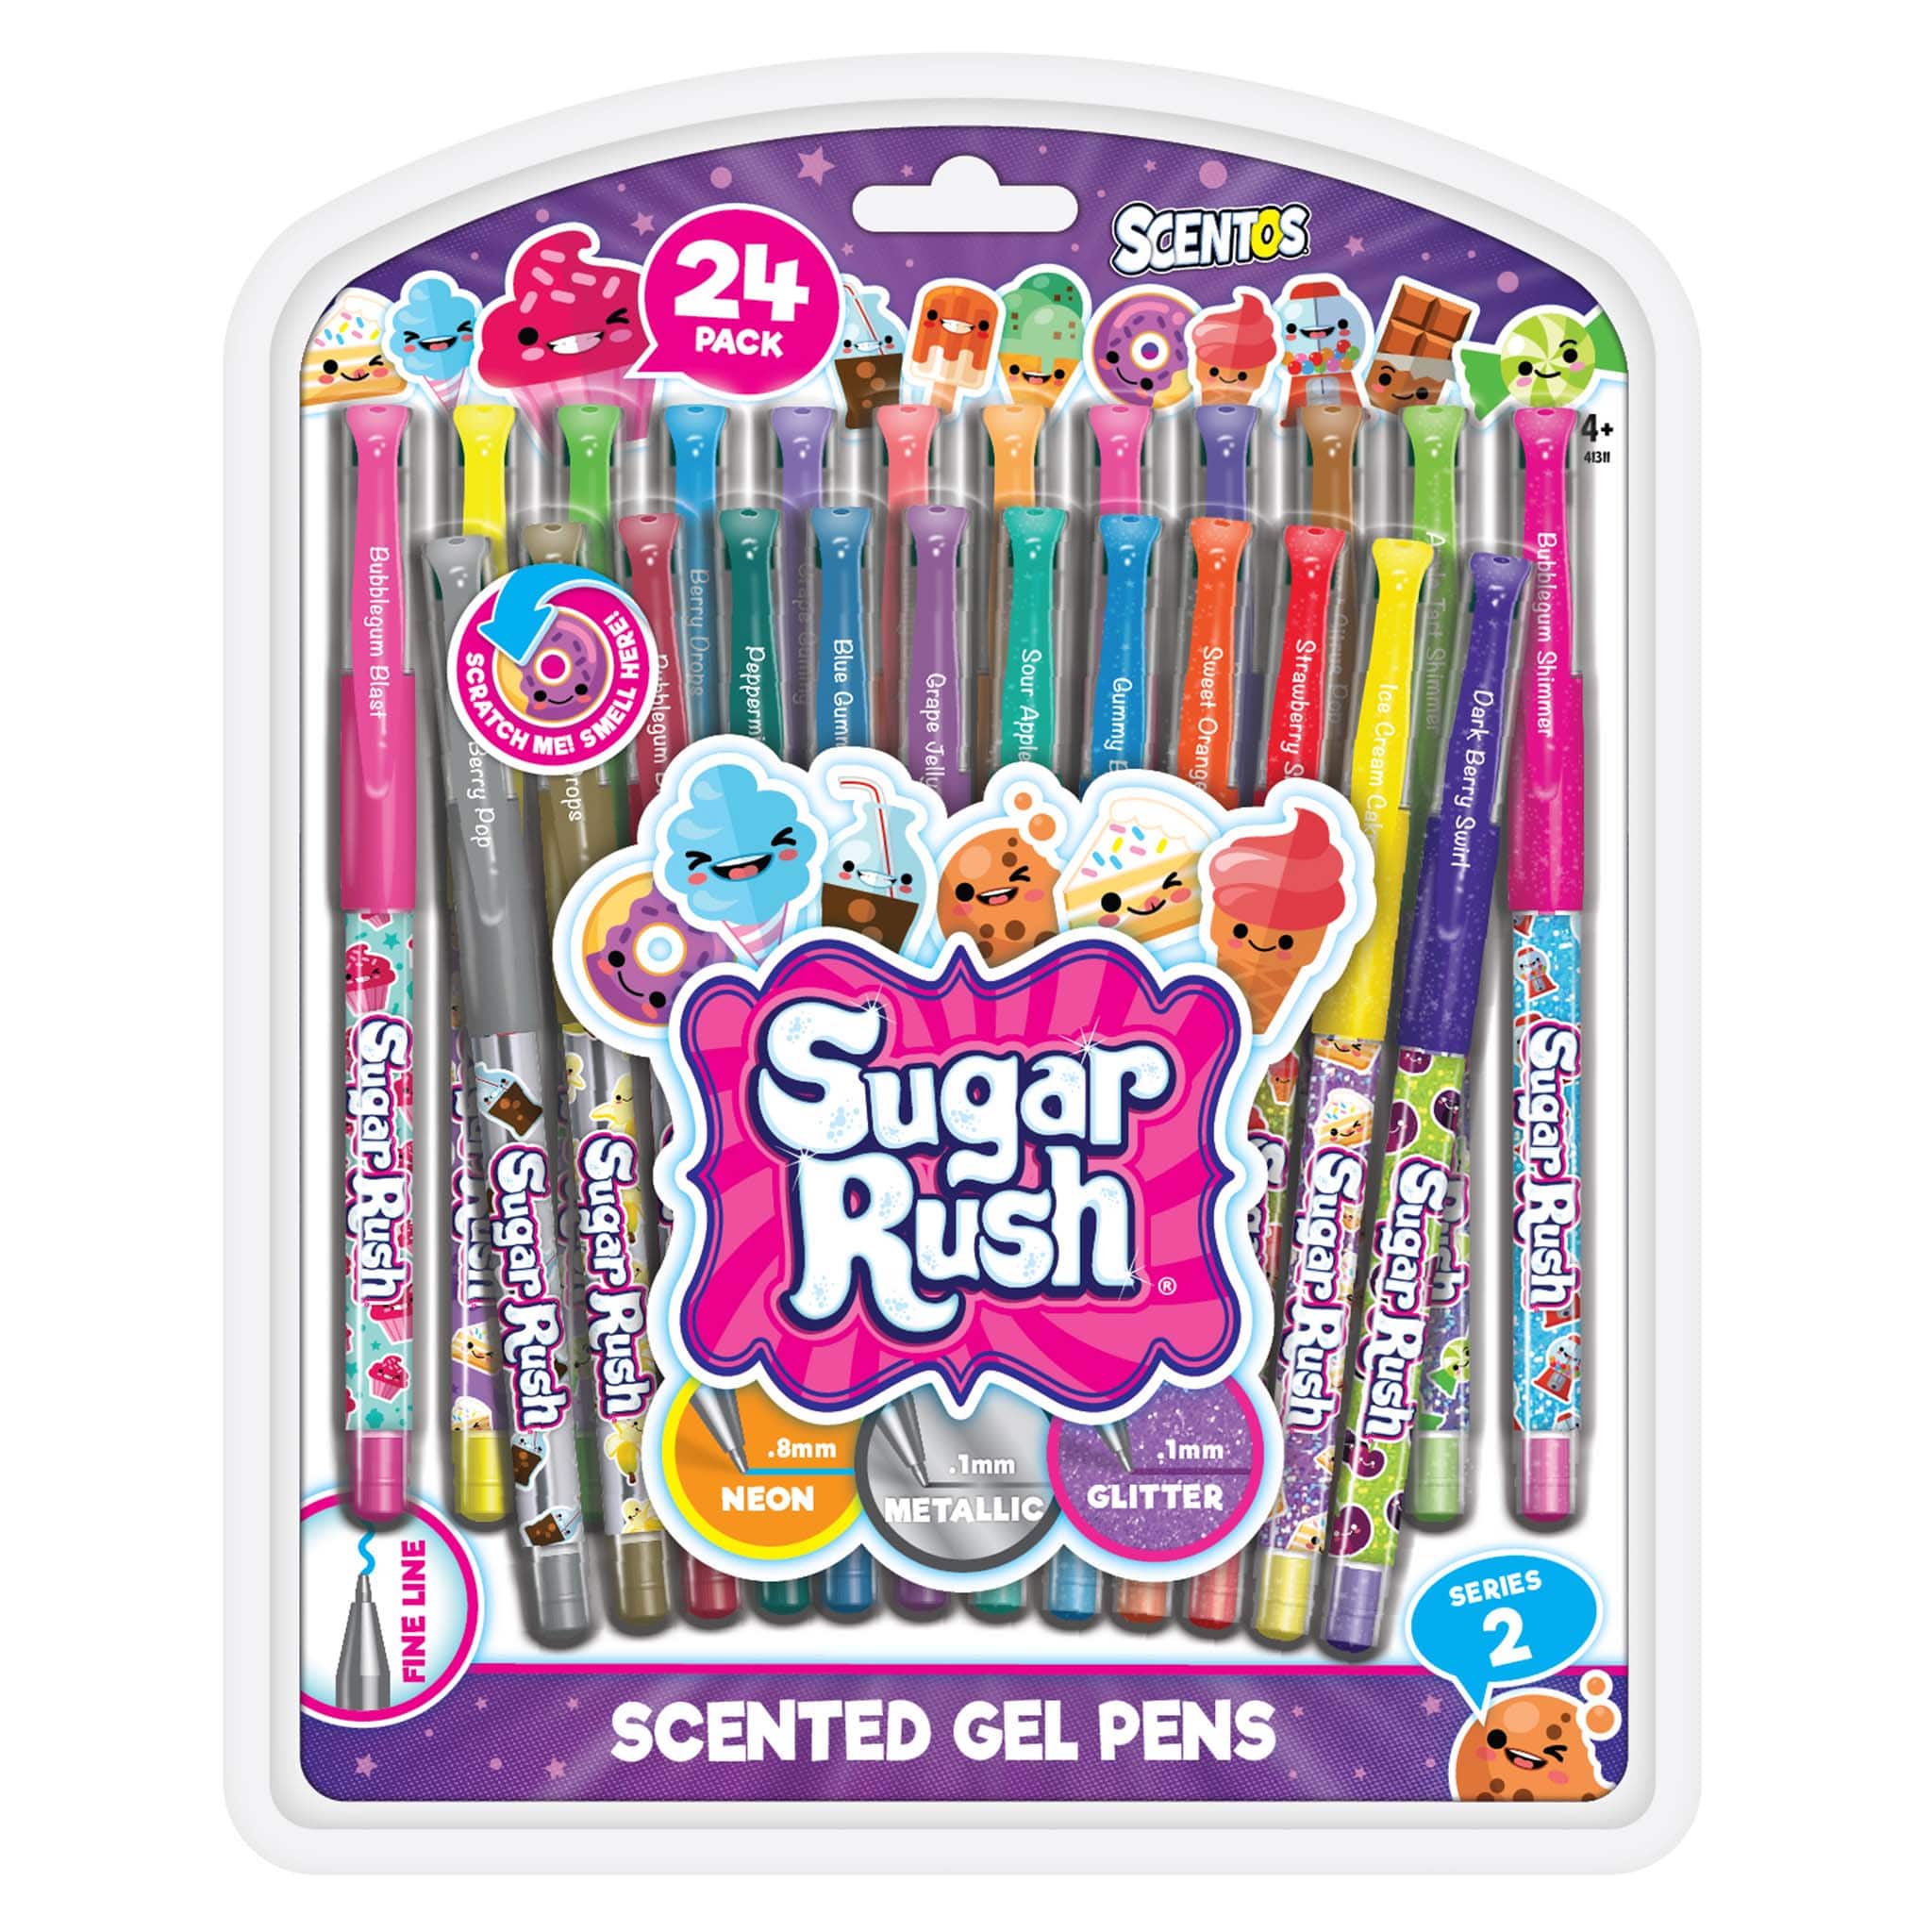 24 Colors Mini Glitter Gel Pen 24 Pack Coloring Books Office